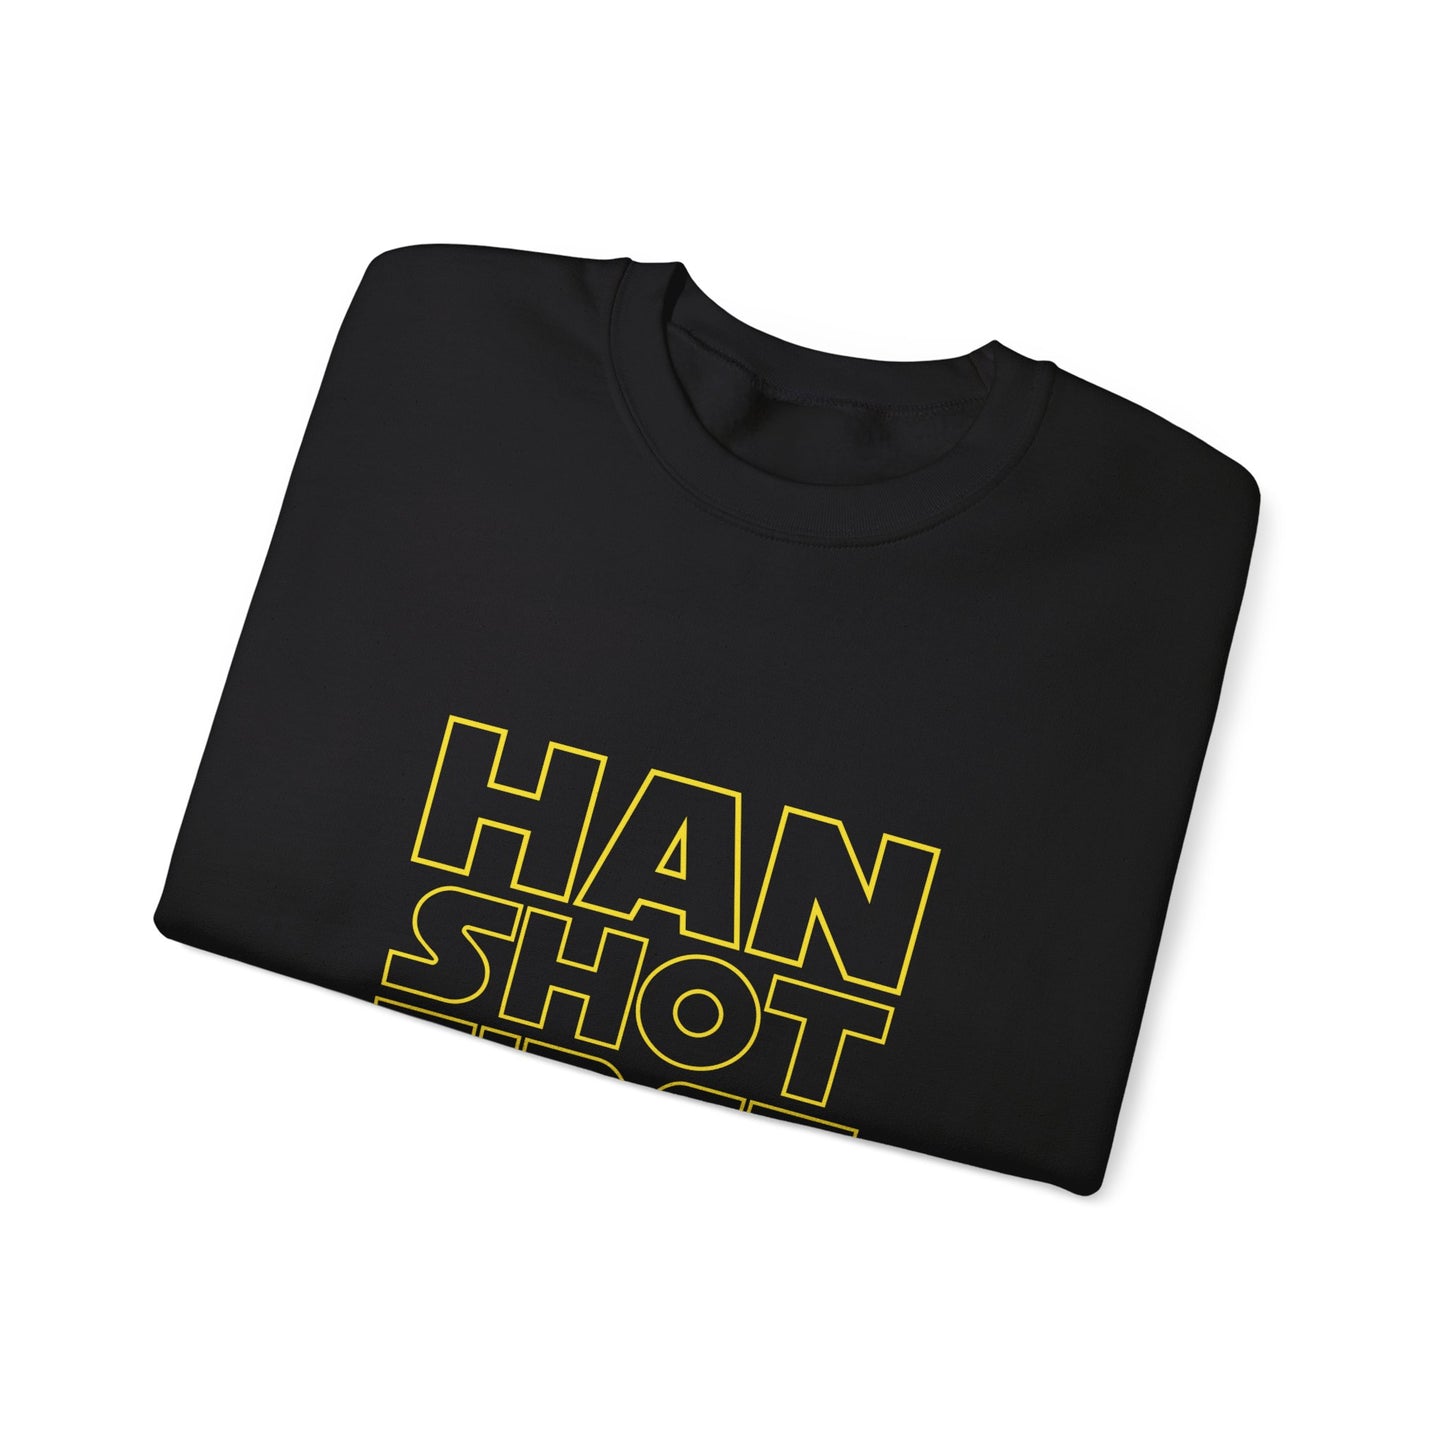 HAN SHOT FIRST Sweatshirt